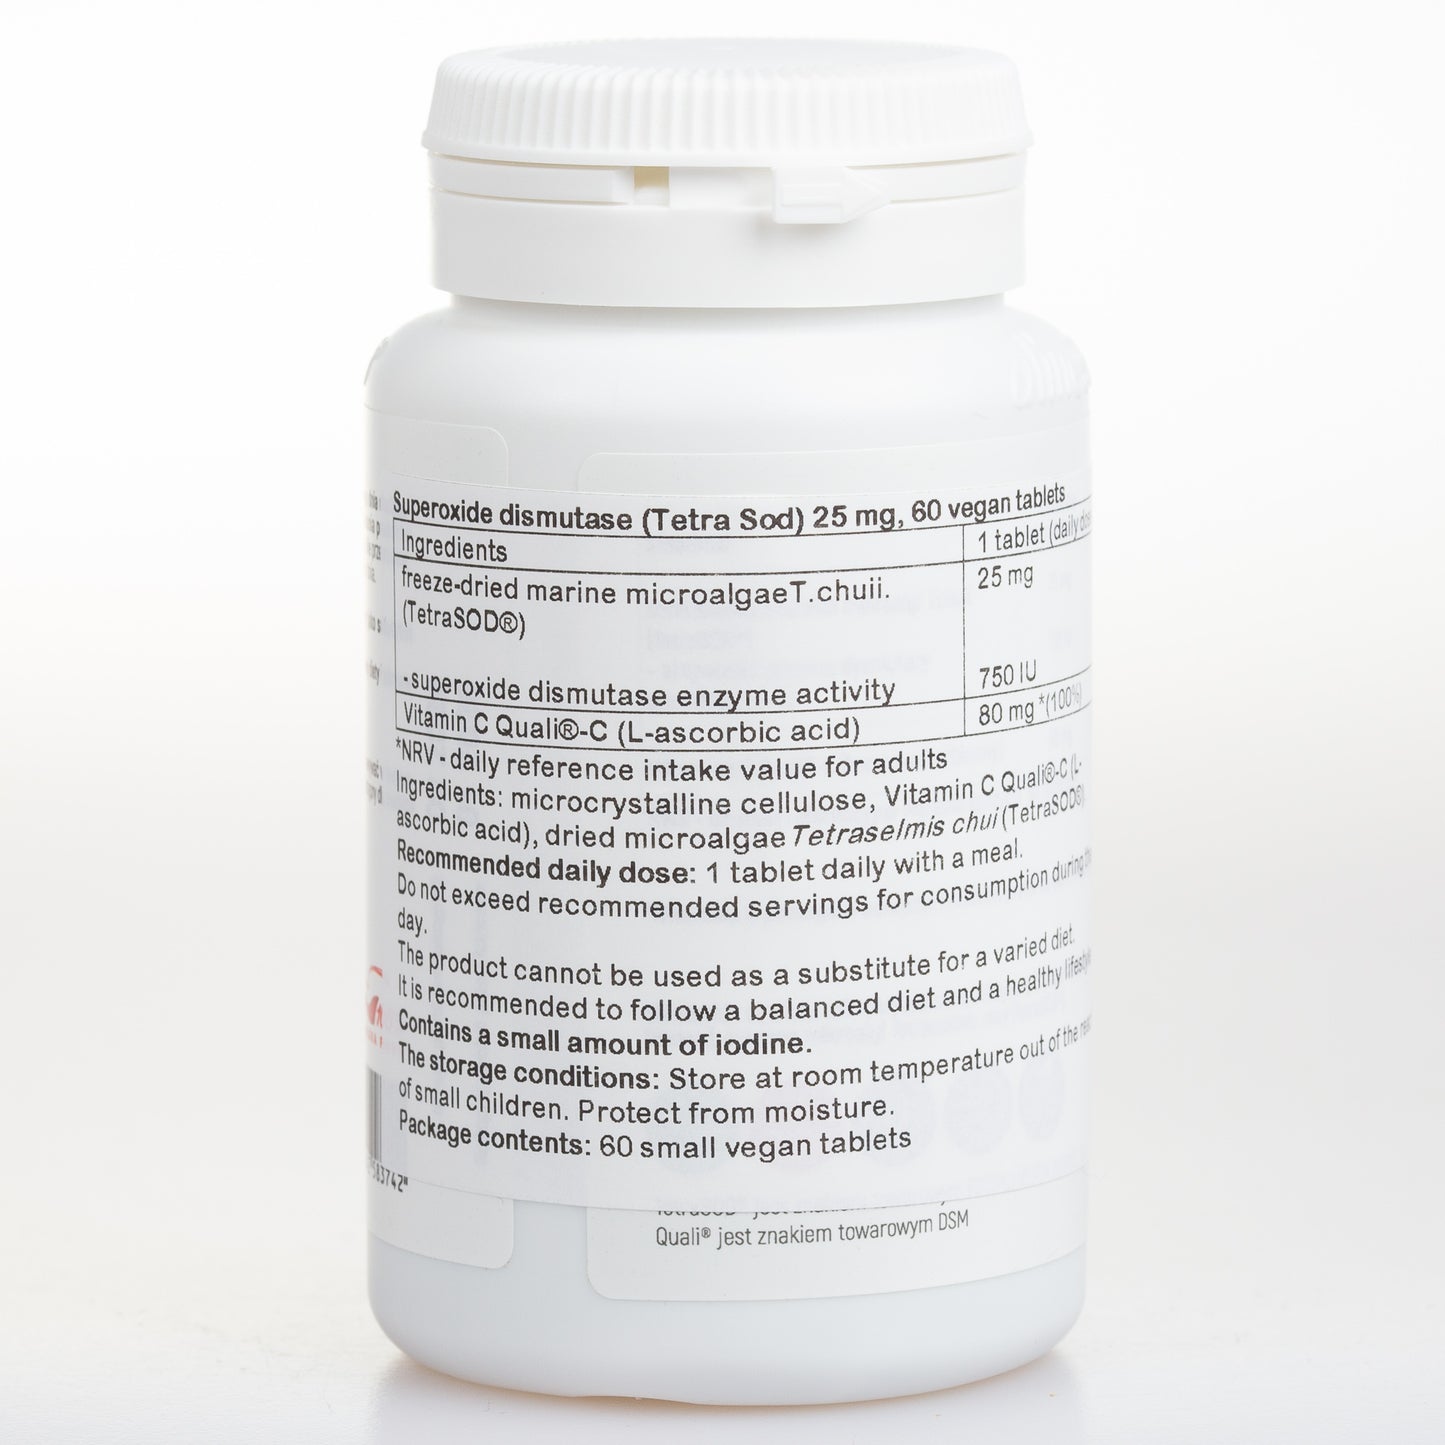 Superoxide dismutase (Tetra Sod) 25 mg, 60 vegan tablets